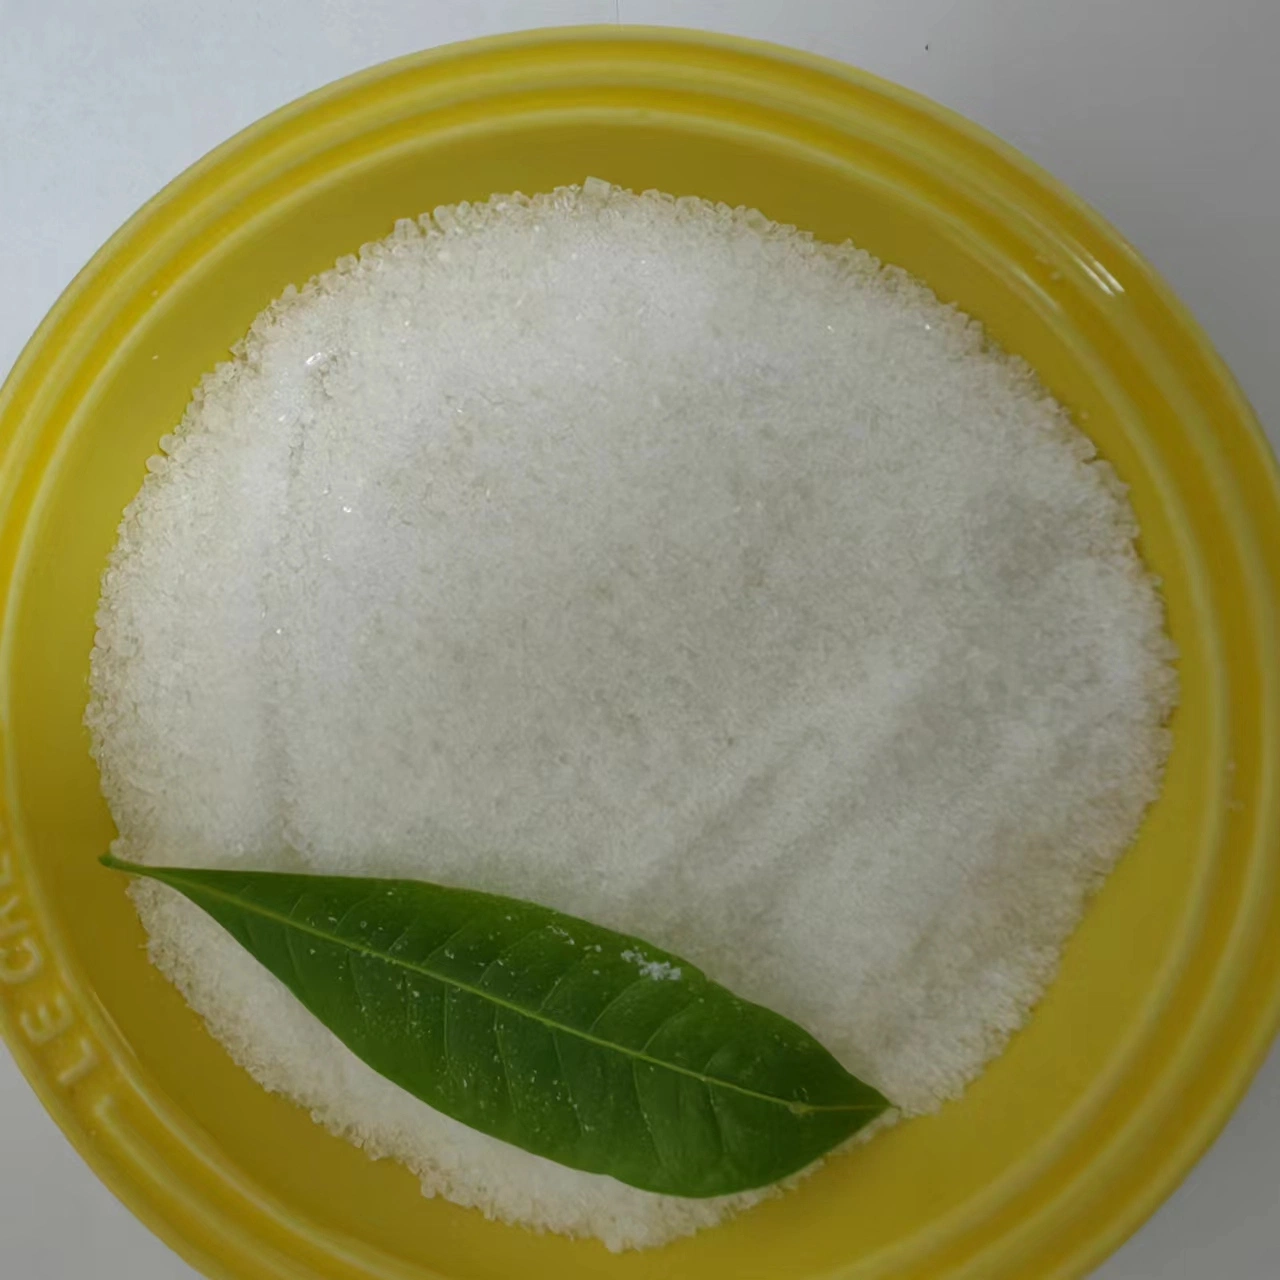 Ammonium Sulfate Powder Food Grade Agricultural Grade CAS No 7783-20-2